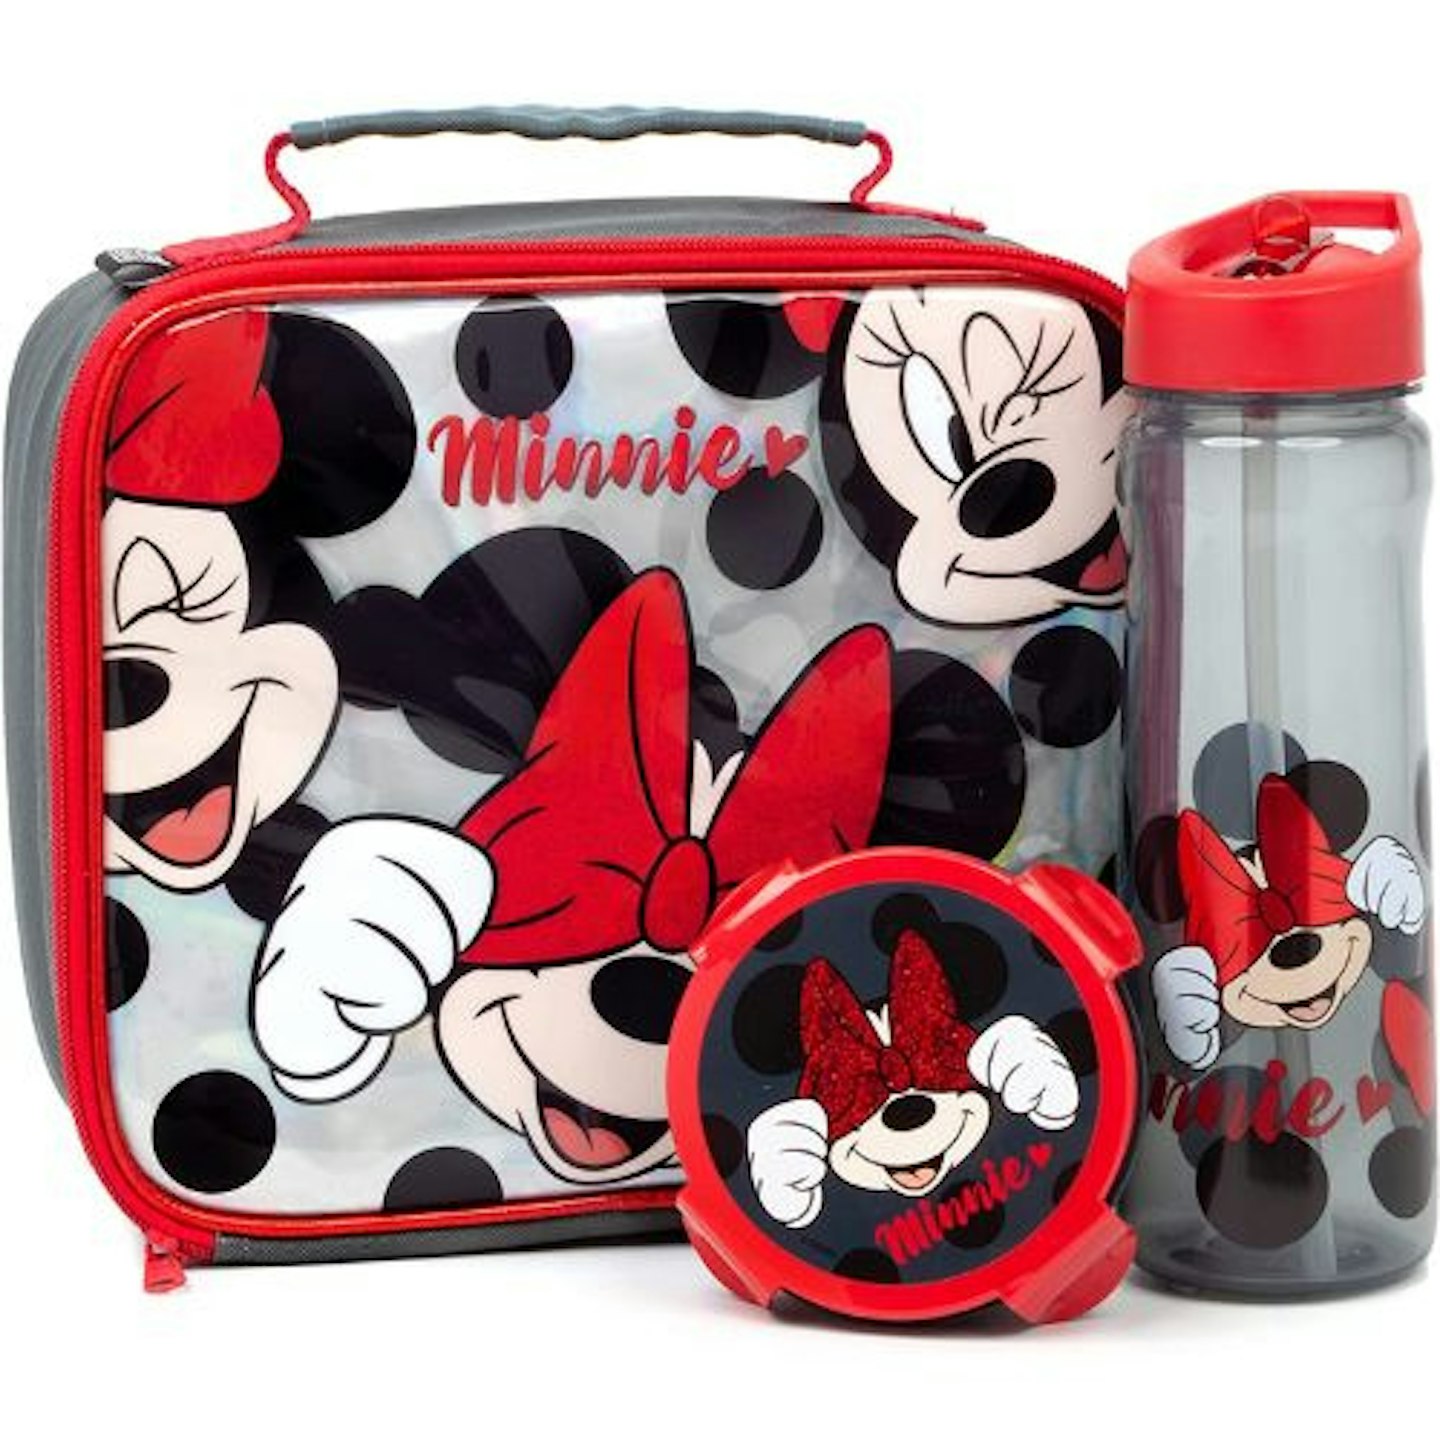 https://images.bauerhosting.com/affiliates/sites/12/motherandbaby/2022/08/Disney-Minnie-Mouse-Lunch-Box-3-Piece-Set.jpg?auto=format&w=1440&q=80